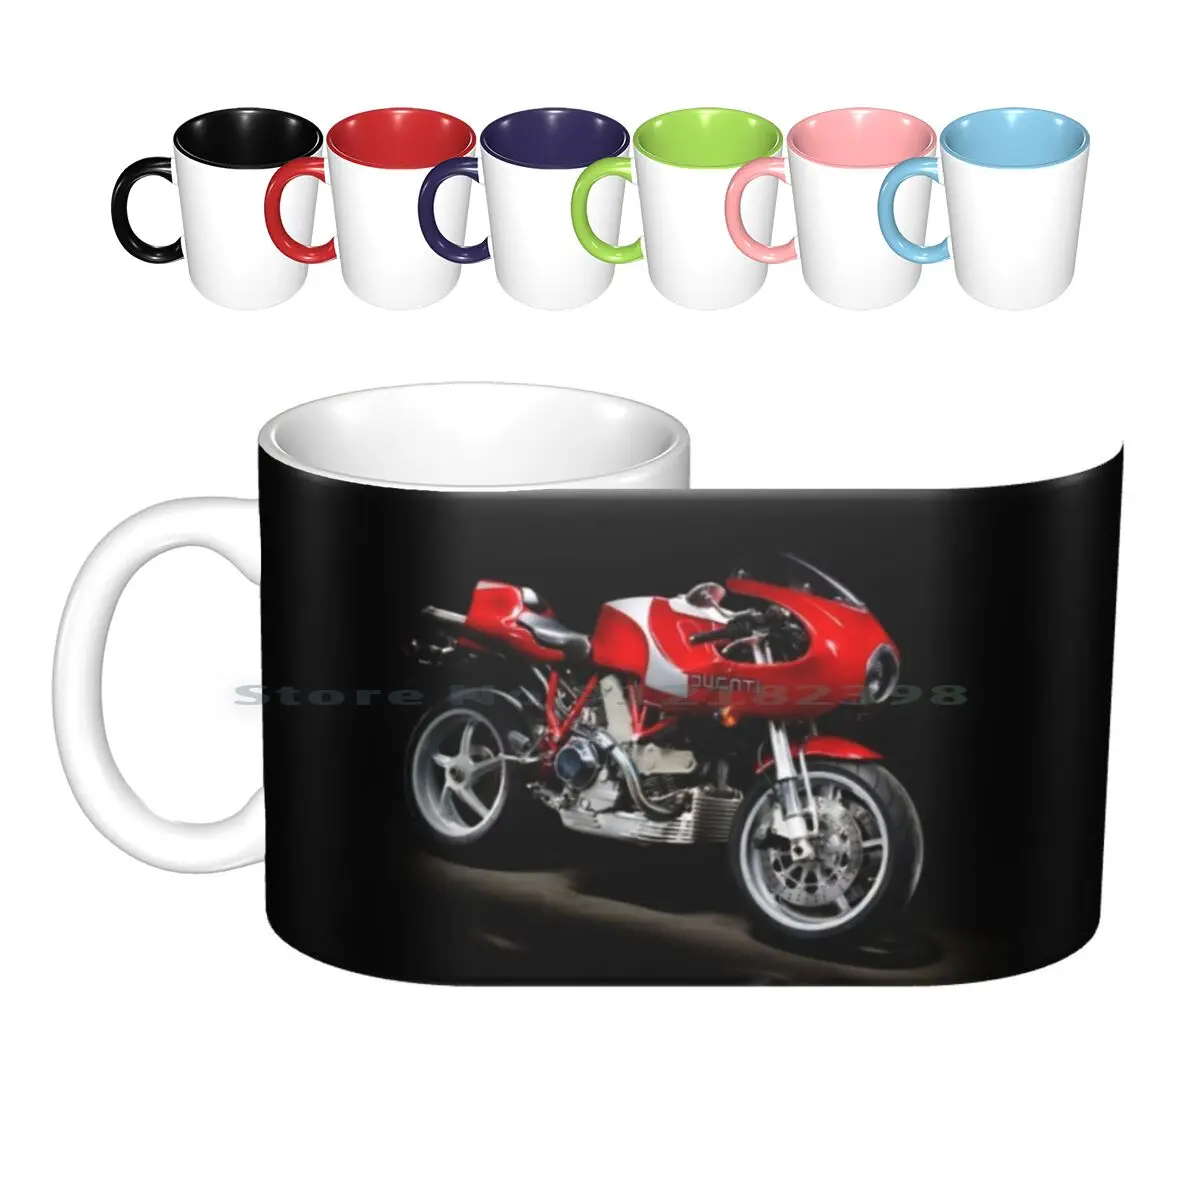 

Mhe Mike Hailwood Evoluzione Ceramic Mugs Coffee Cups Milk Tea Mug Motorcycle Motorbike Classic Bike Italian Creative Trending